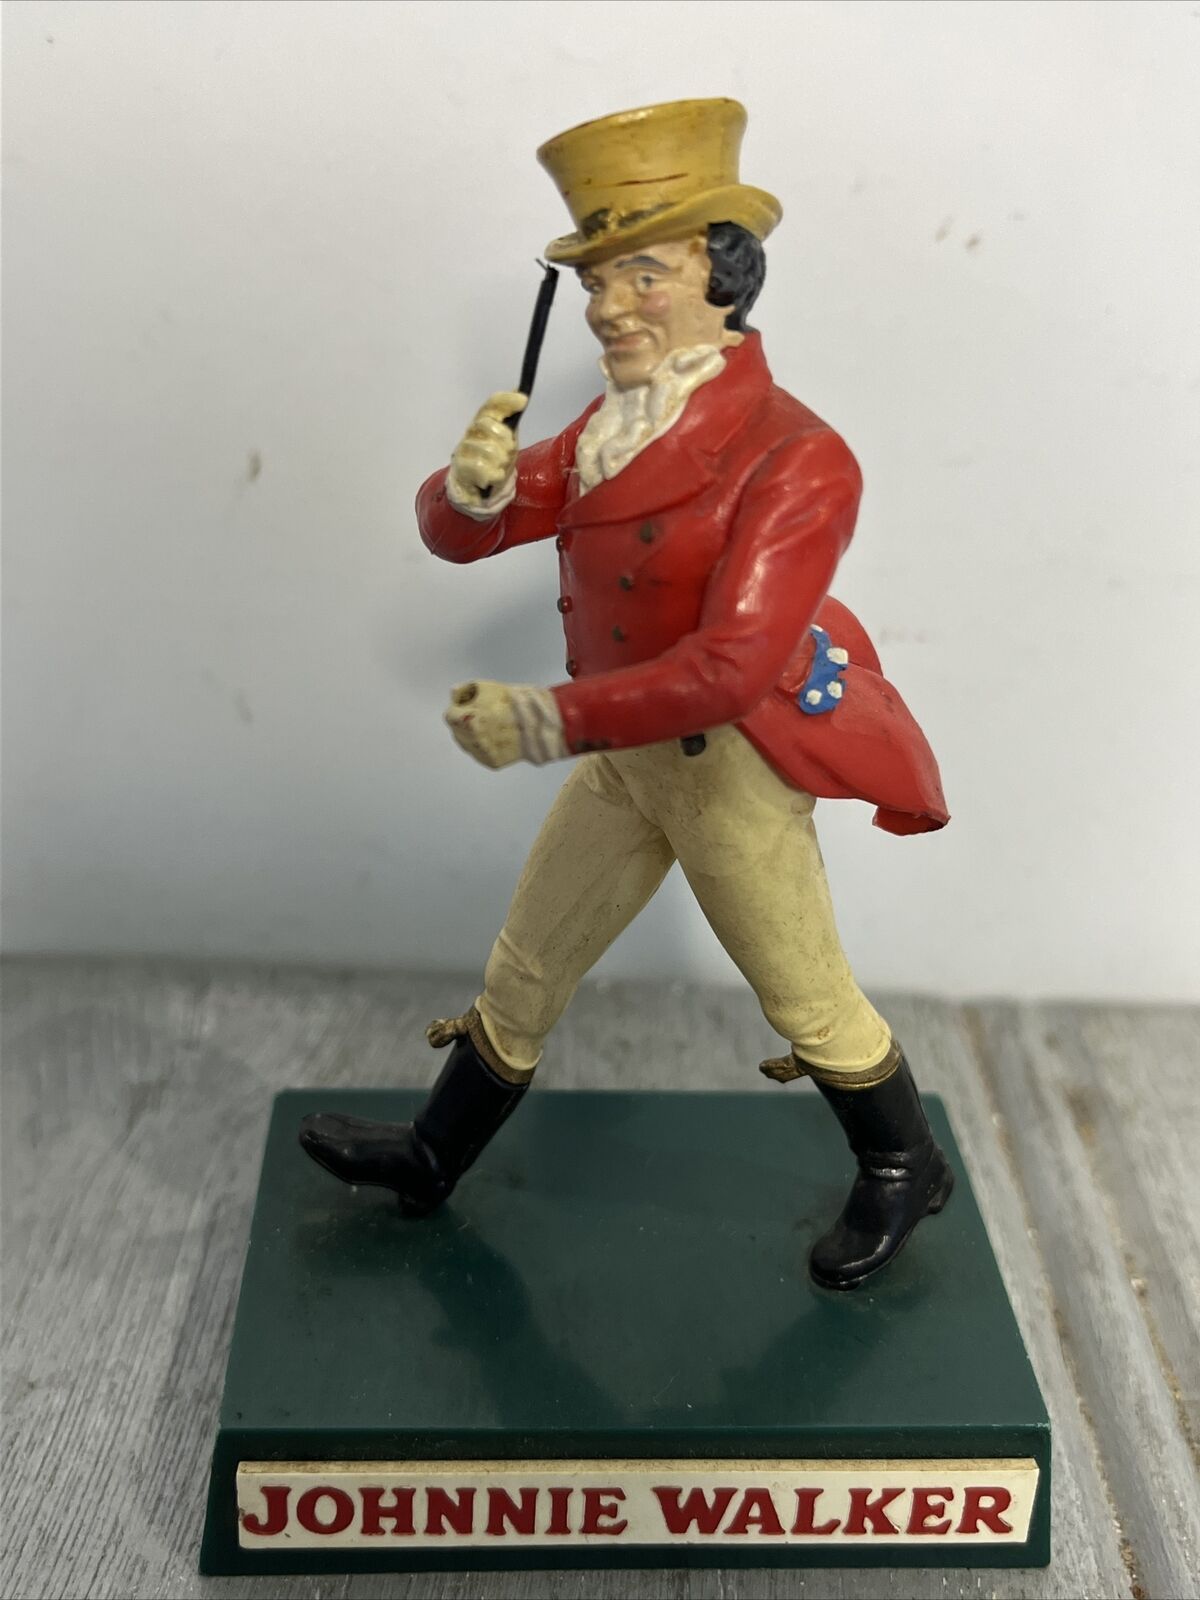 Johnnie Walker Rare Plastic Vintage Figurine Collectable.